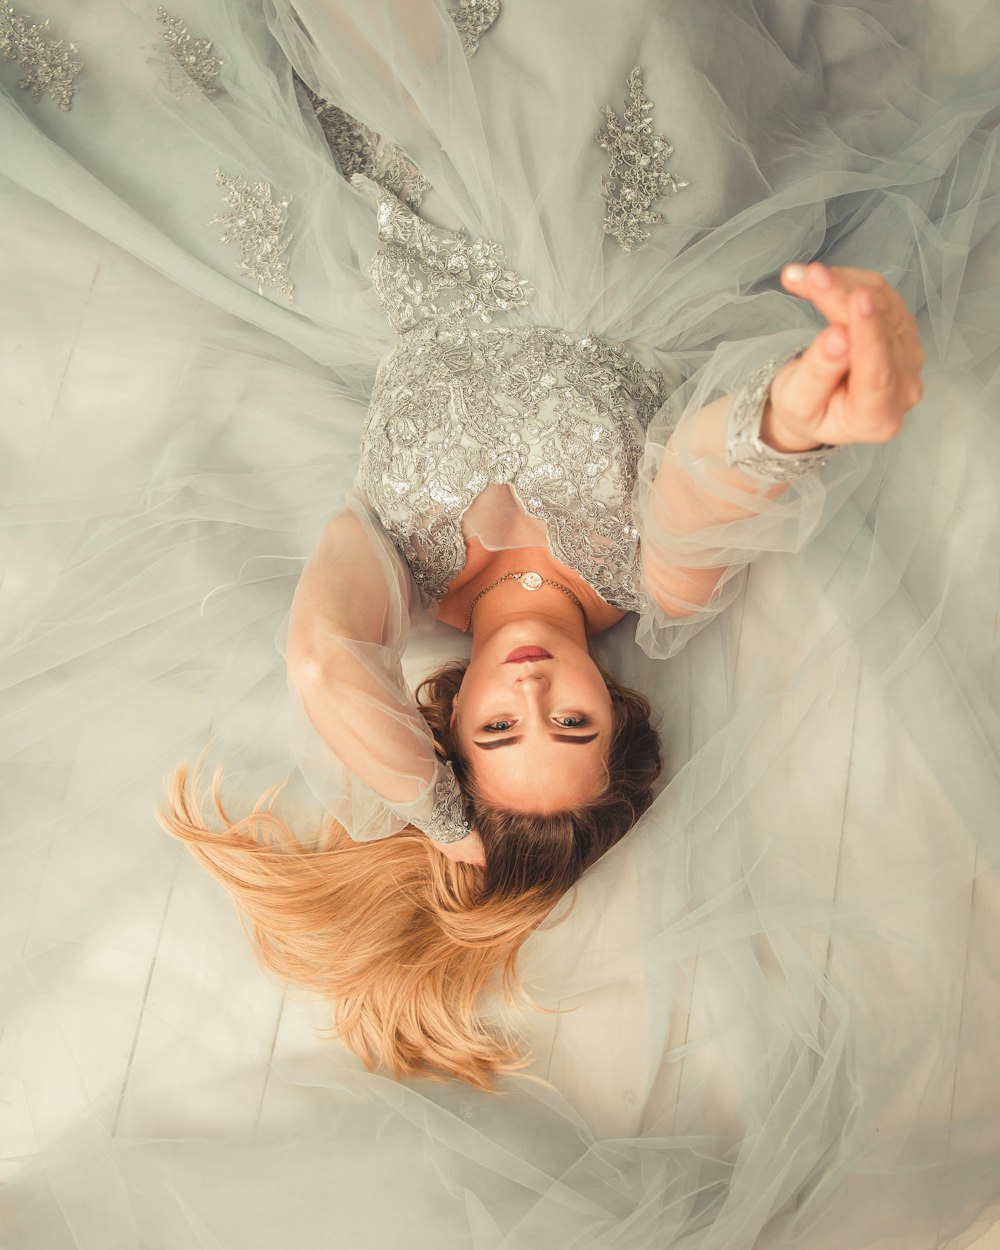 woman in wedding dress lying on bed